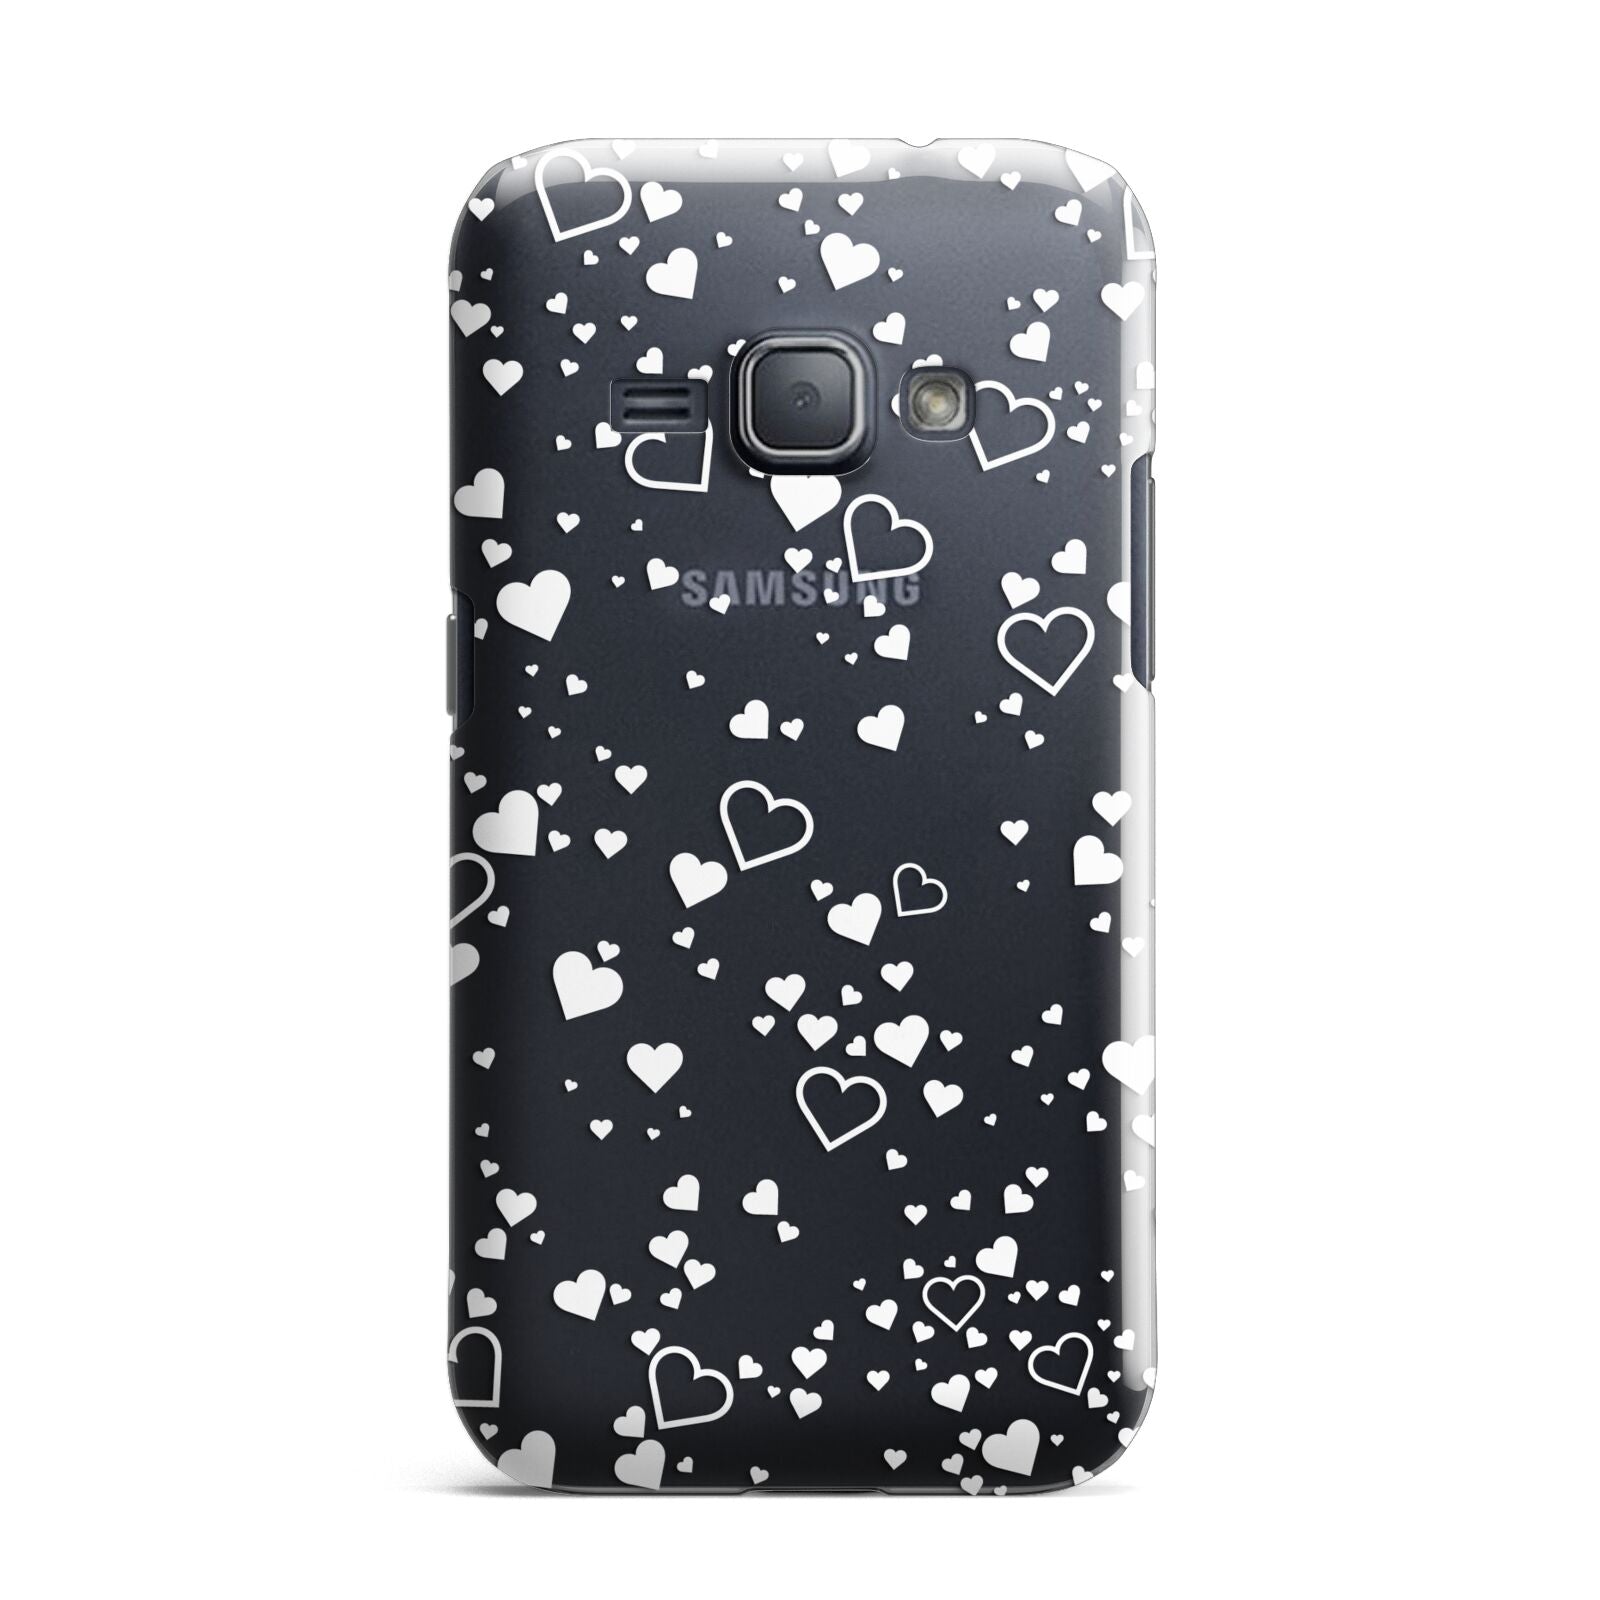 White Heart Samsung Galaxy J1 2016 Case